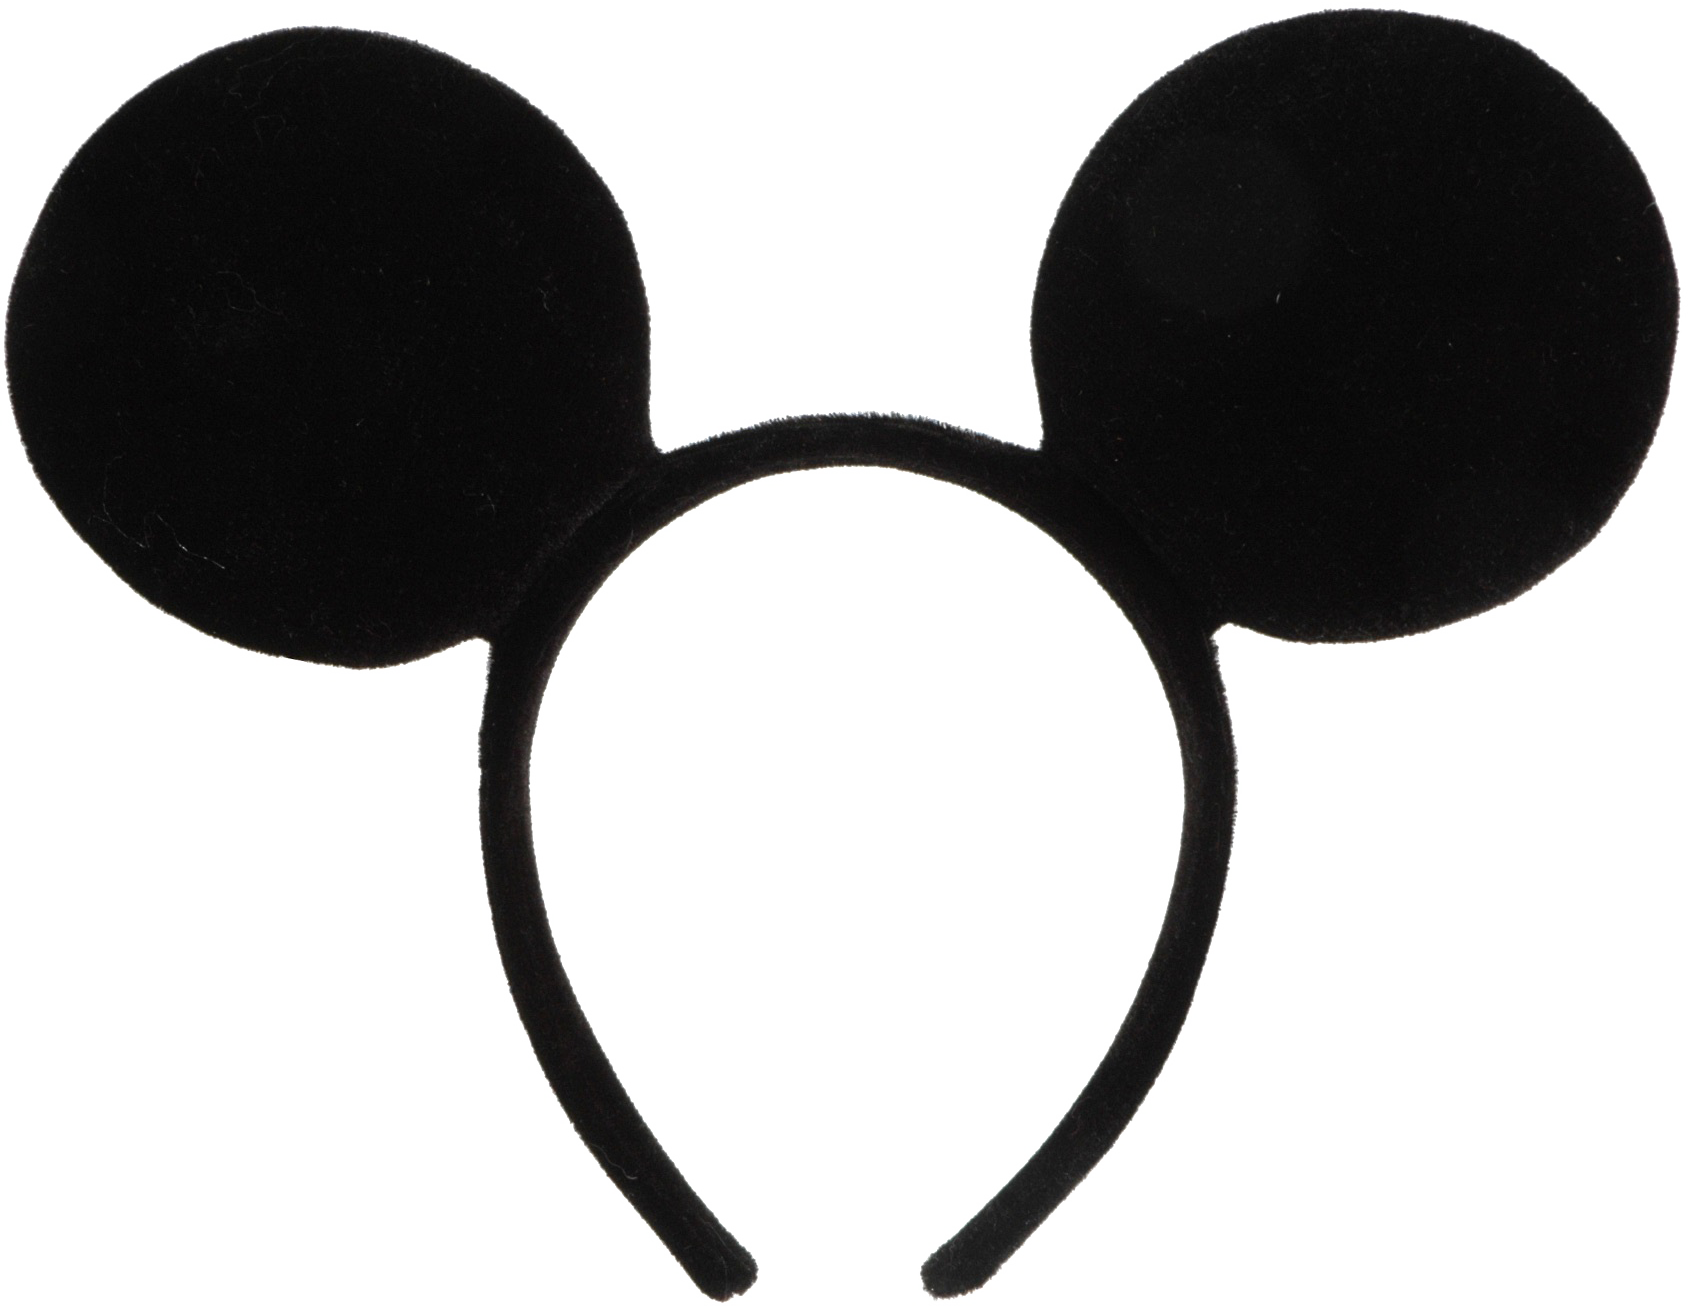 Iconic Mickey Mouse Ears Headband